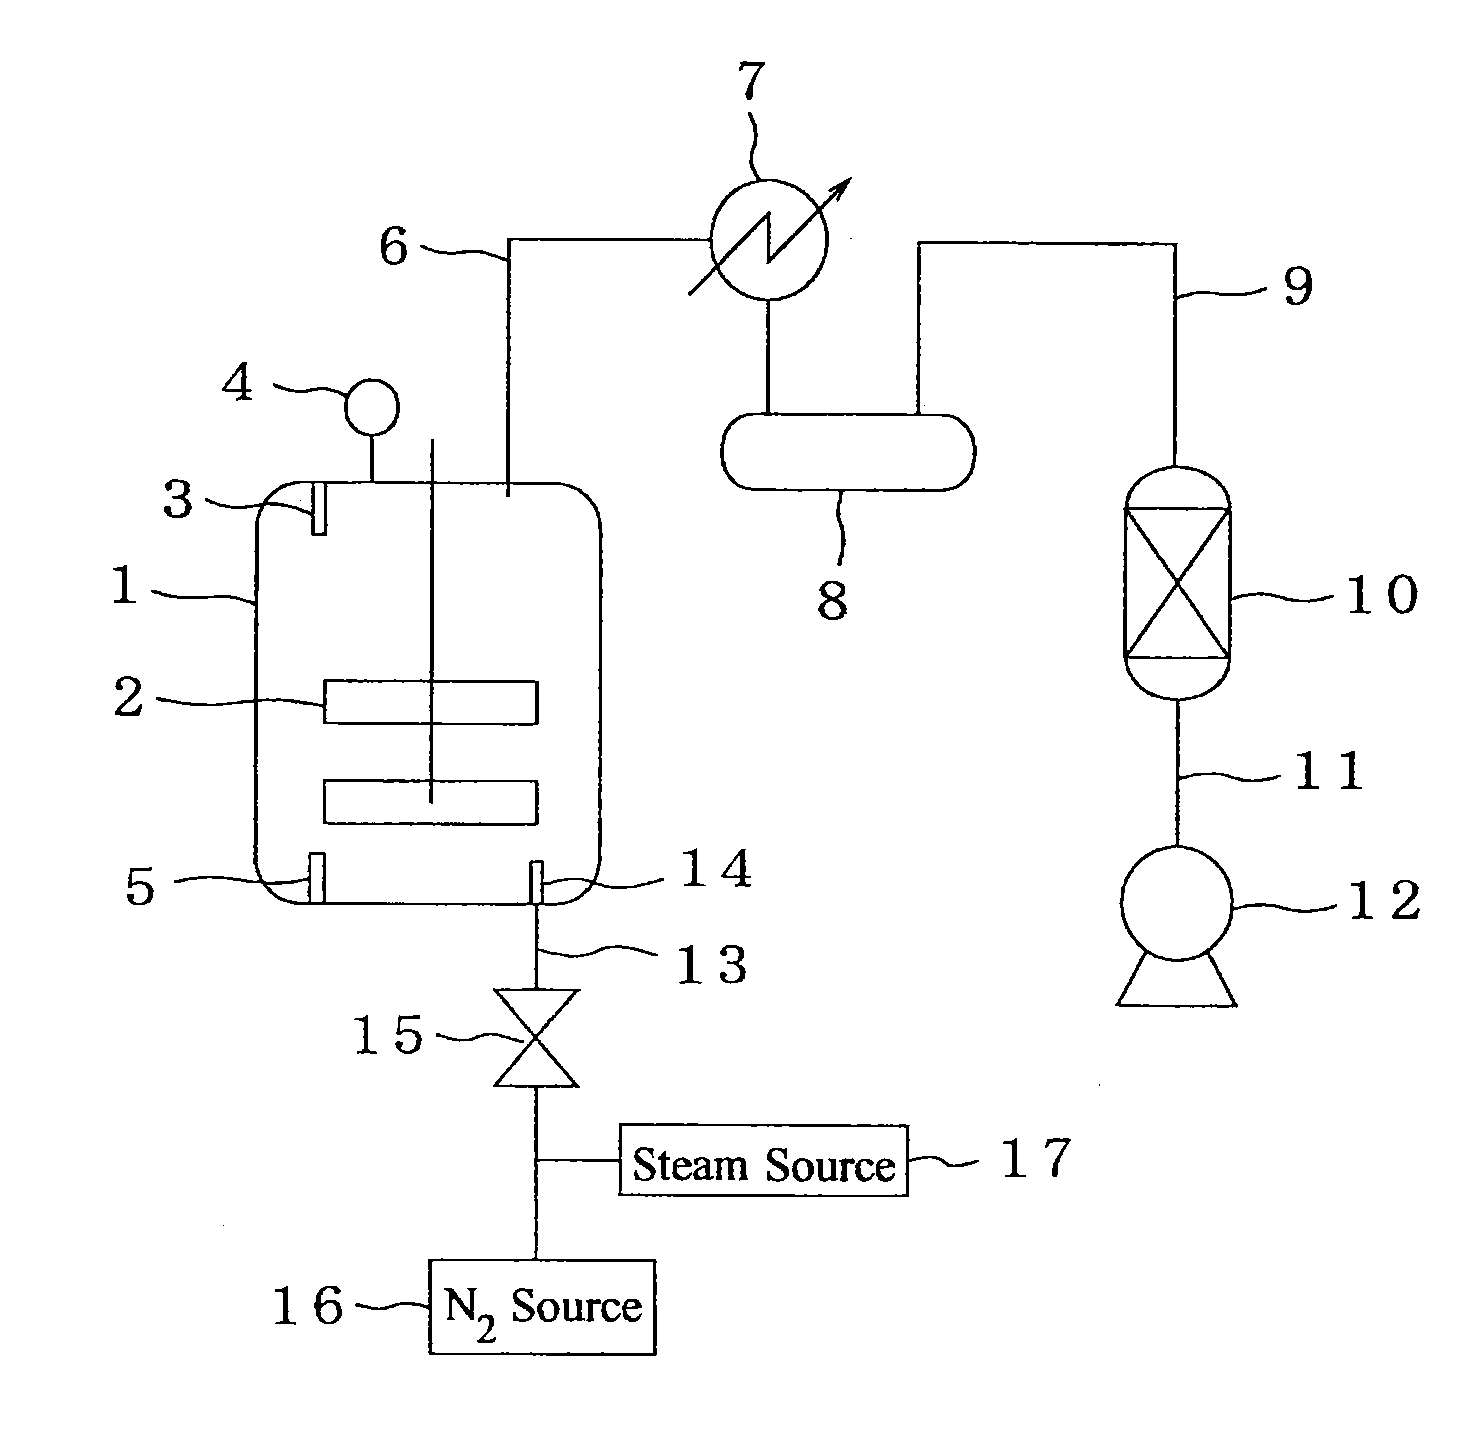 Production process of polymerized toner